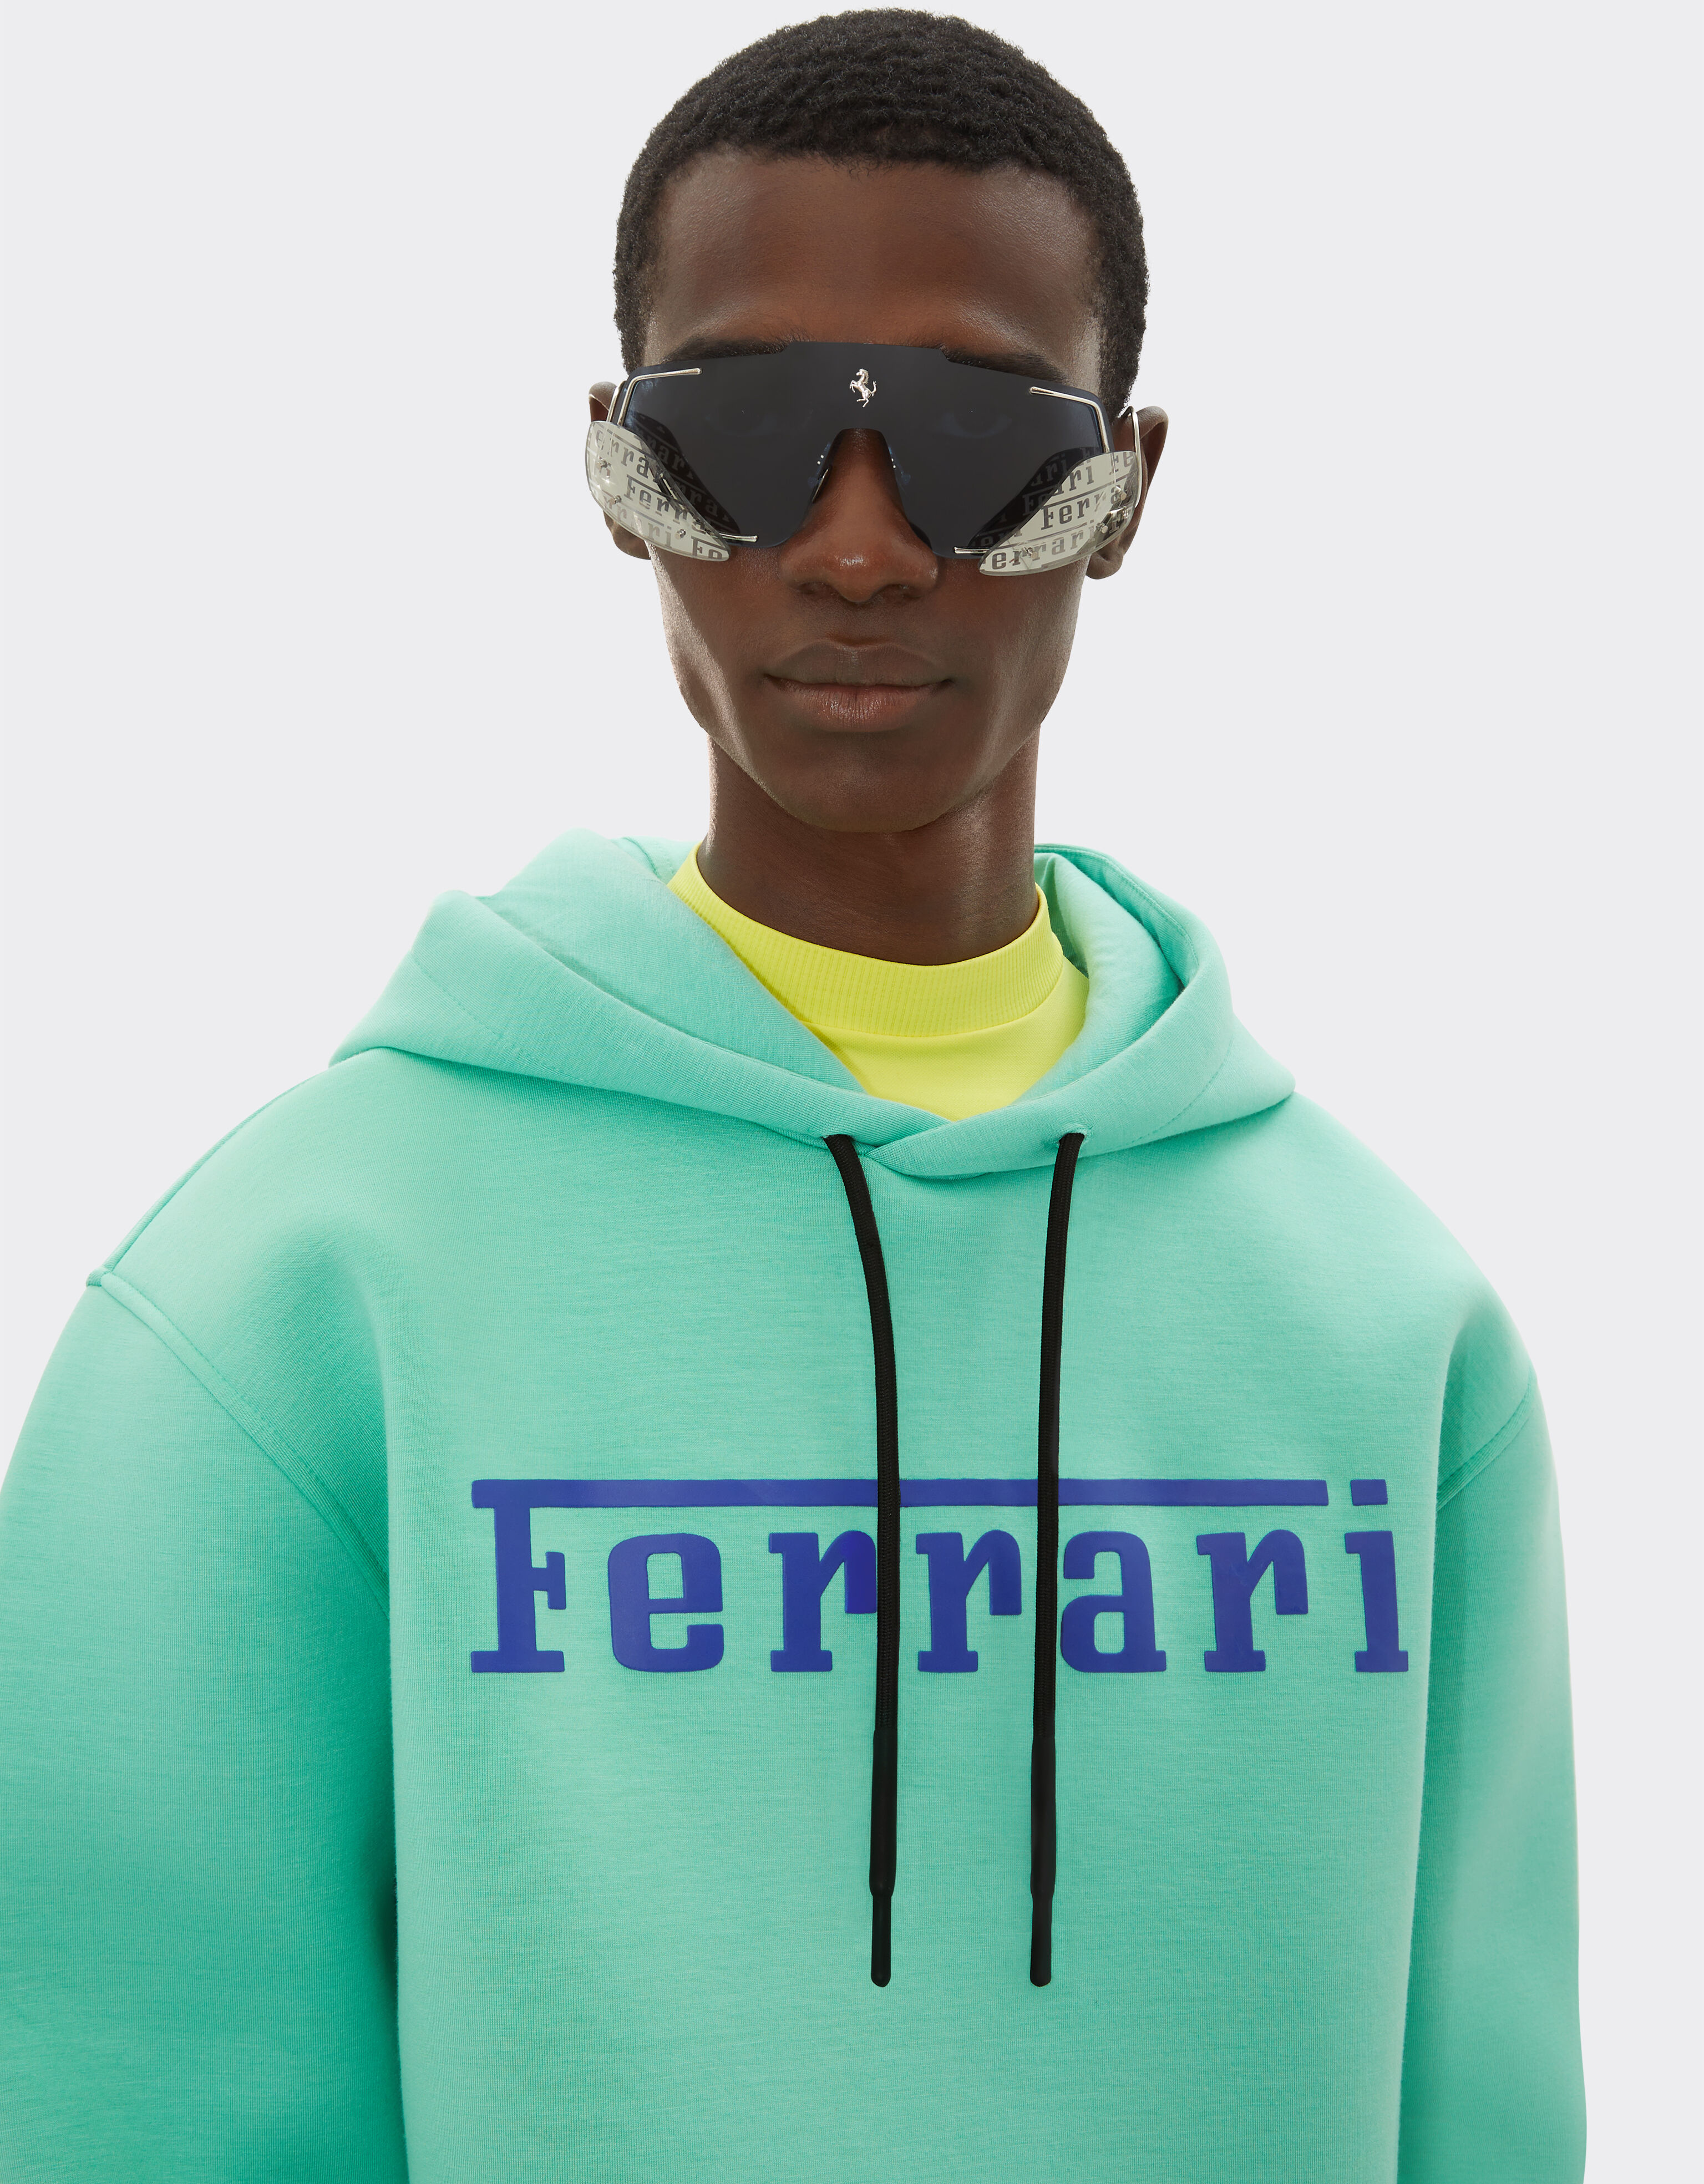 Ferrari Scuba knit sweatshirt with contrast Ferrari logo Aquamarine 47819f